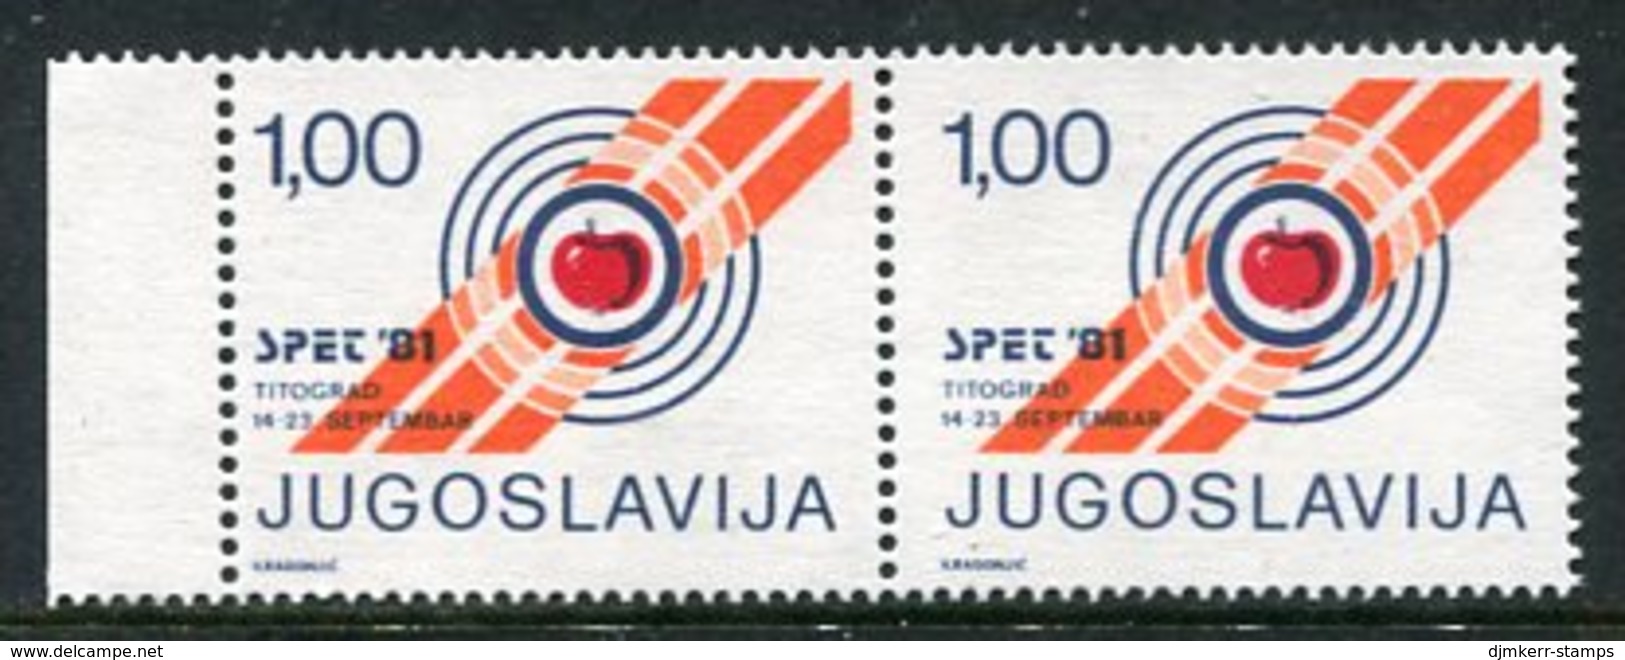 YUGOSLAVIA 1981 SPET '81 European Shooting Championship Tax Stamp, Marginal Pair With Variety MNH / ** - Liefdadigheid